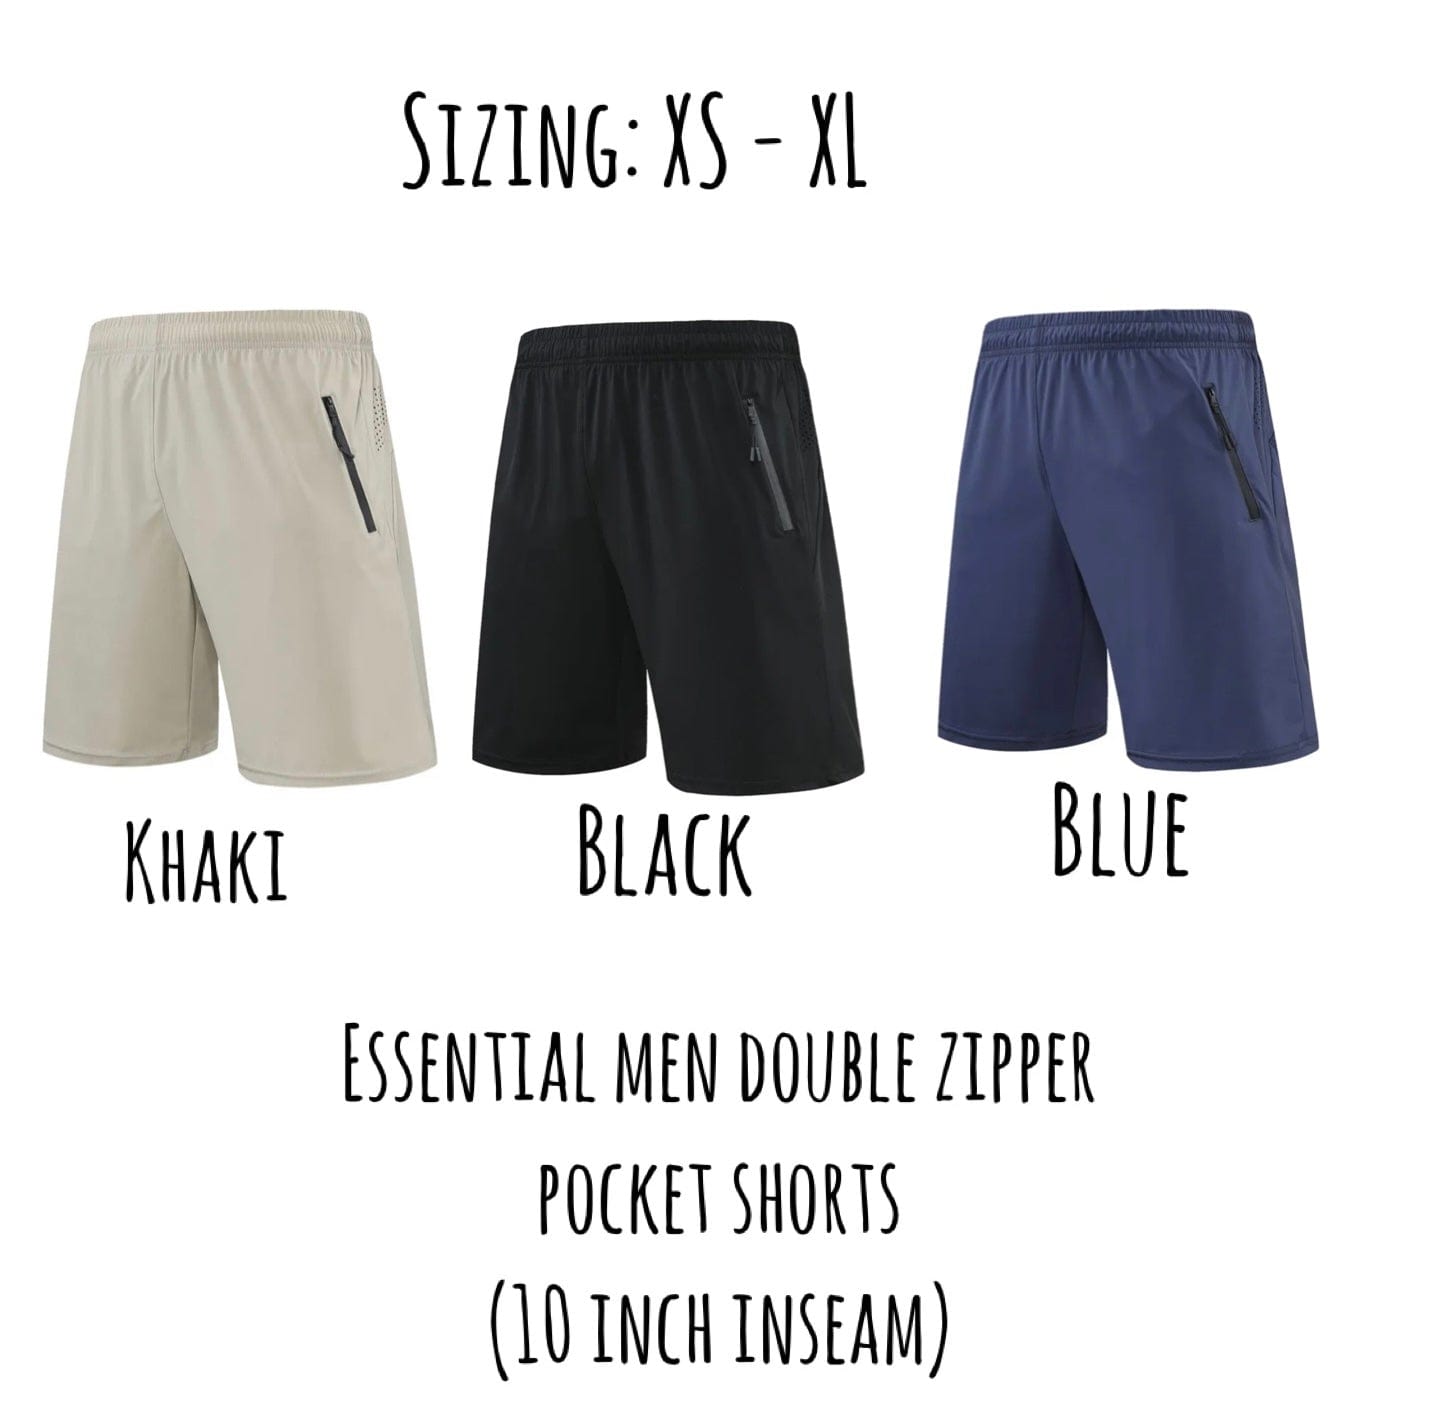 Essential men double zipper pocket shorts (10 inch inseam)